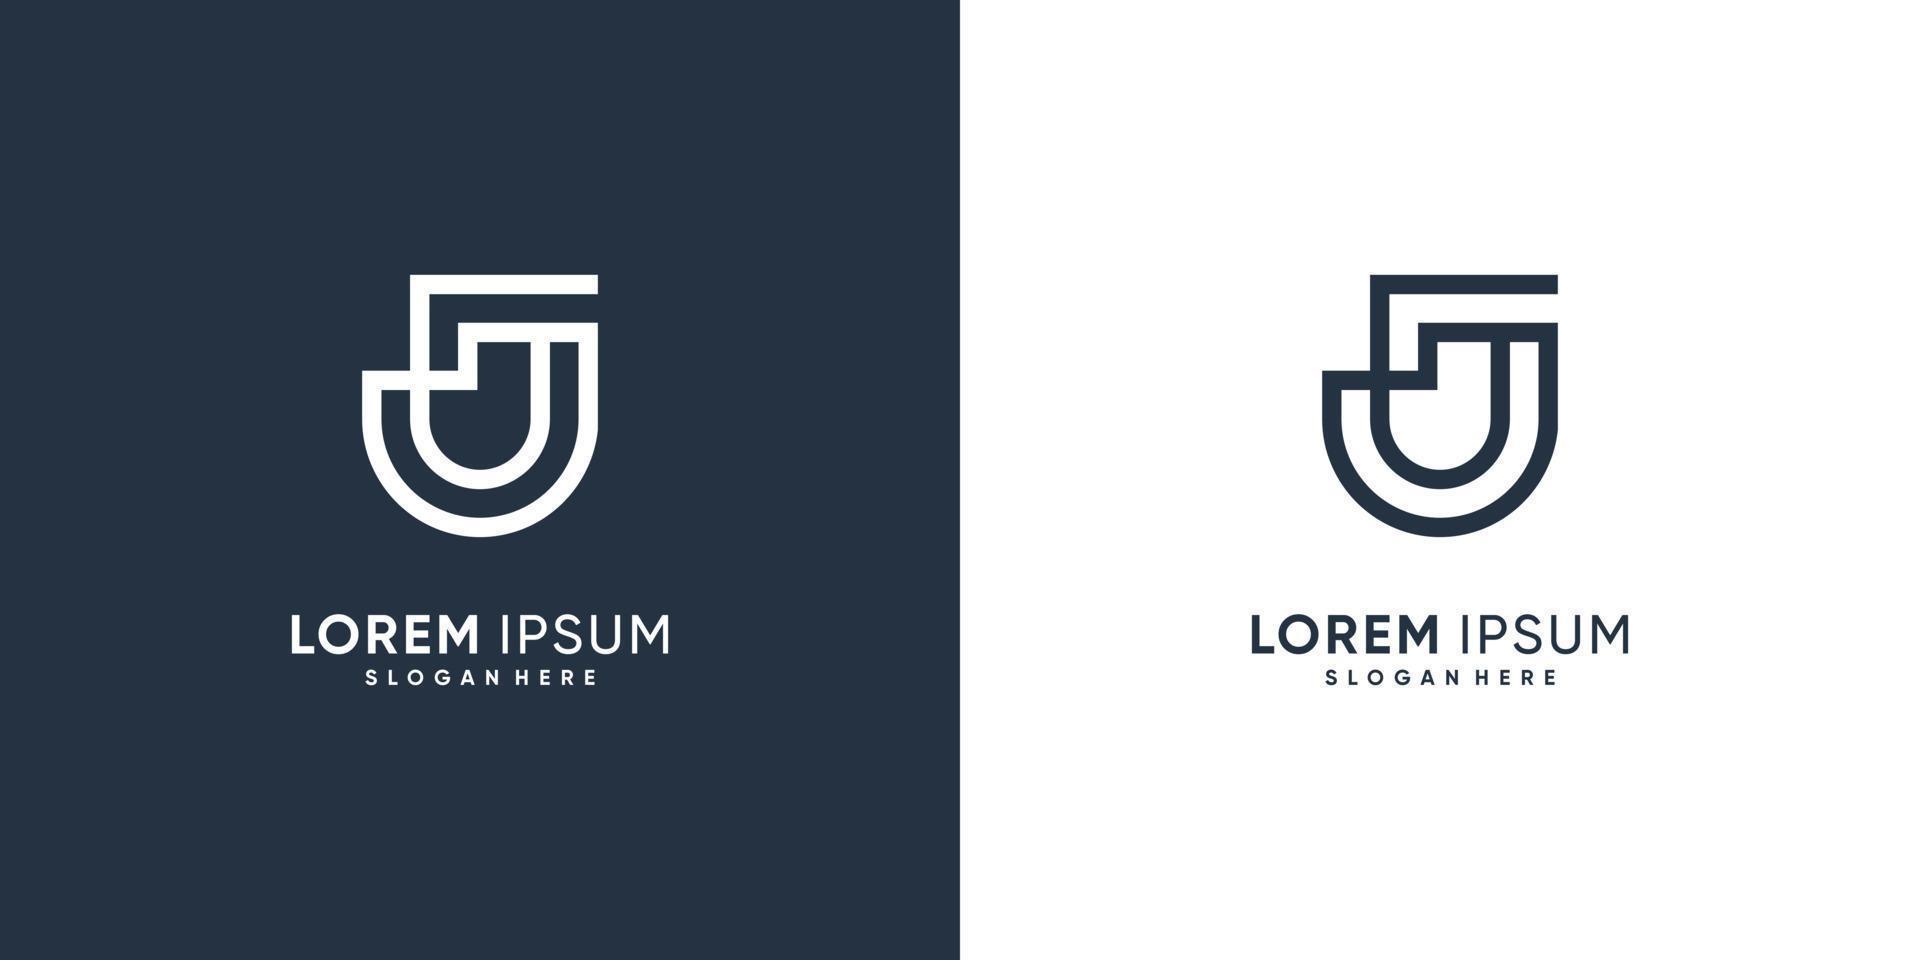 plantilla de logotipo j con vector premium de estilo creativo moderno parte 4